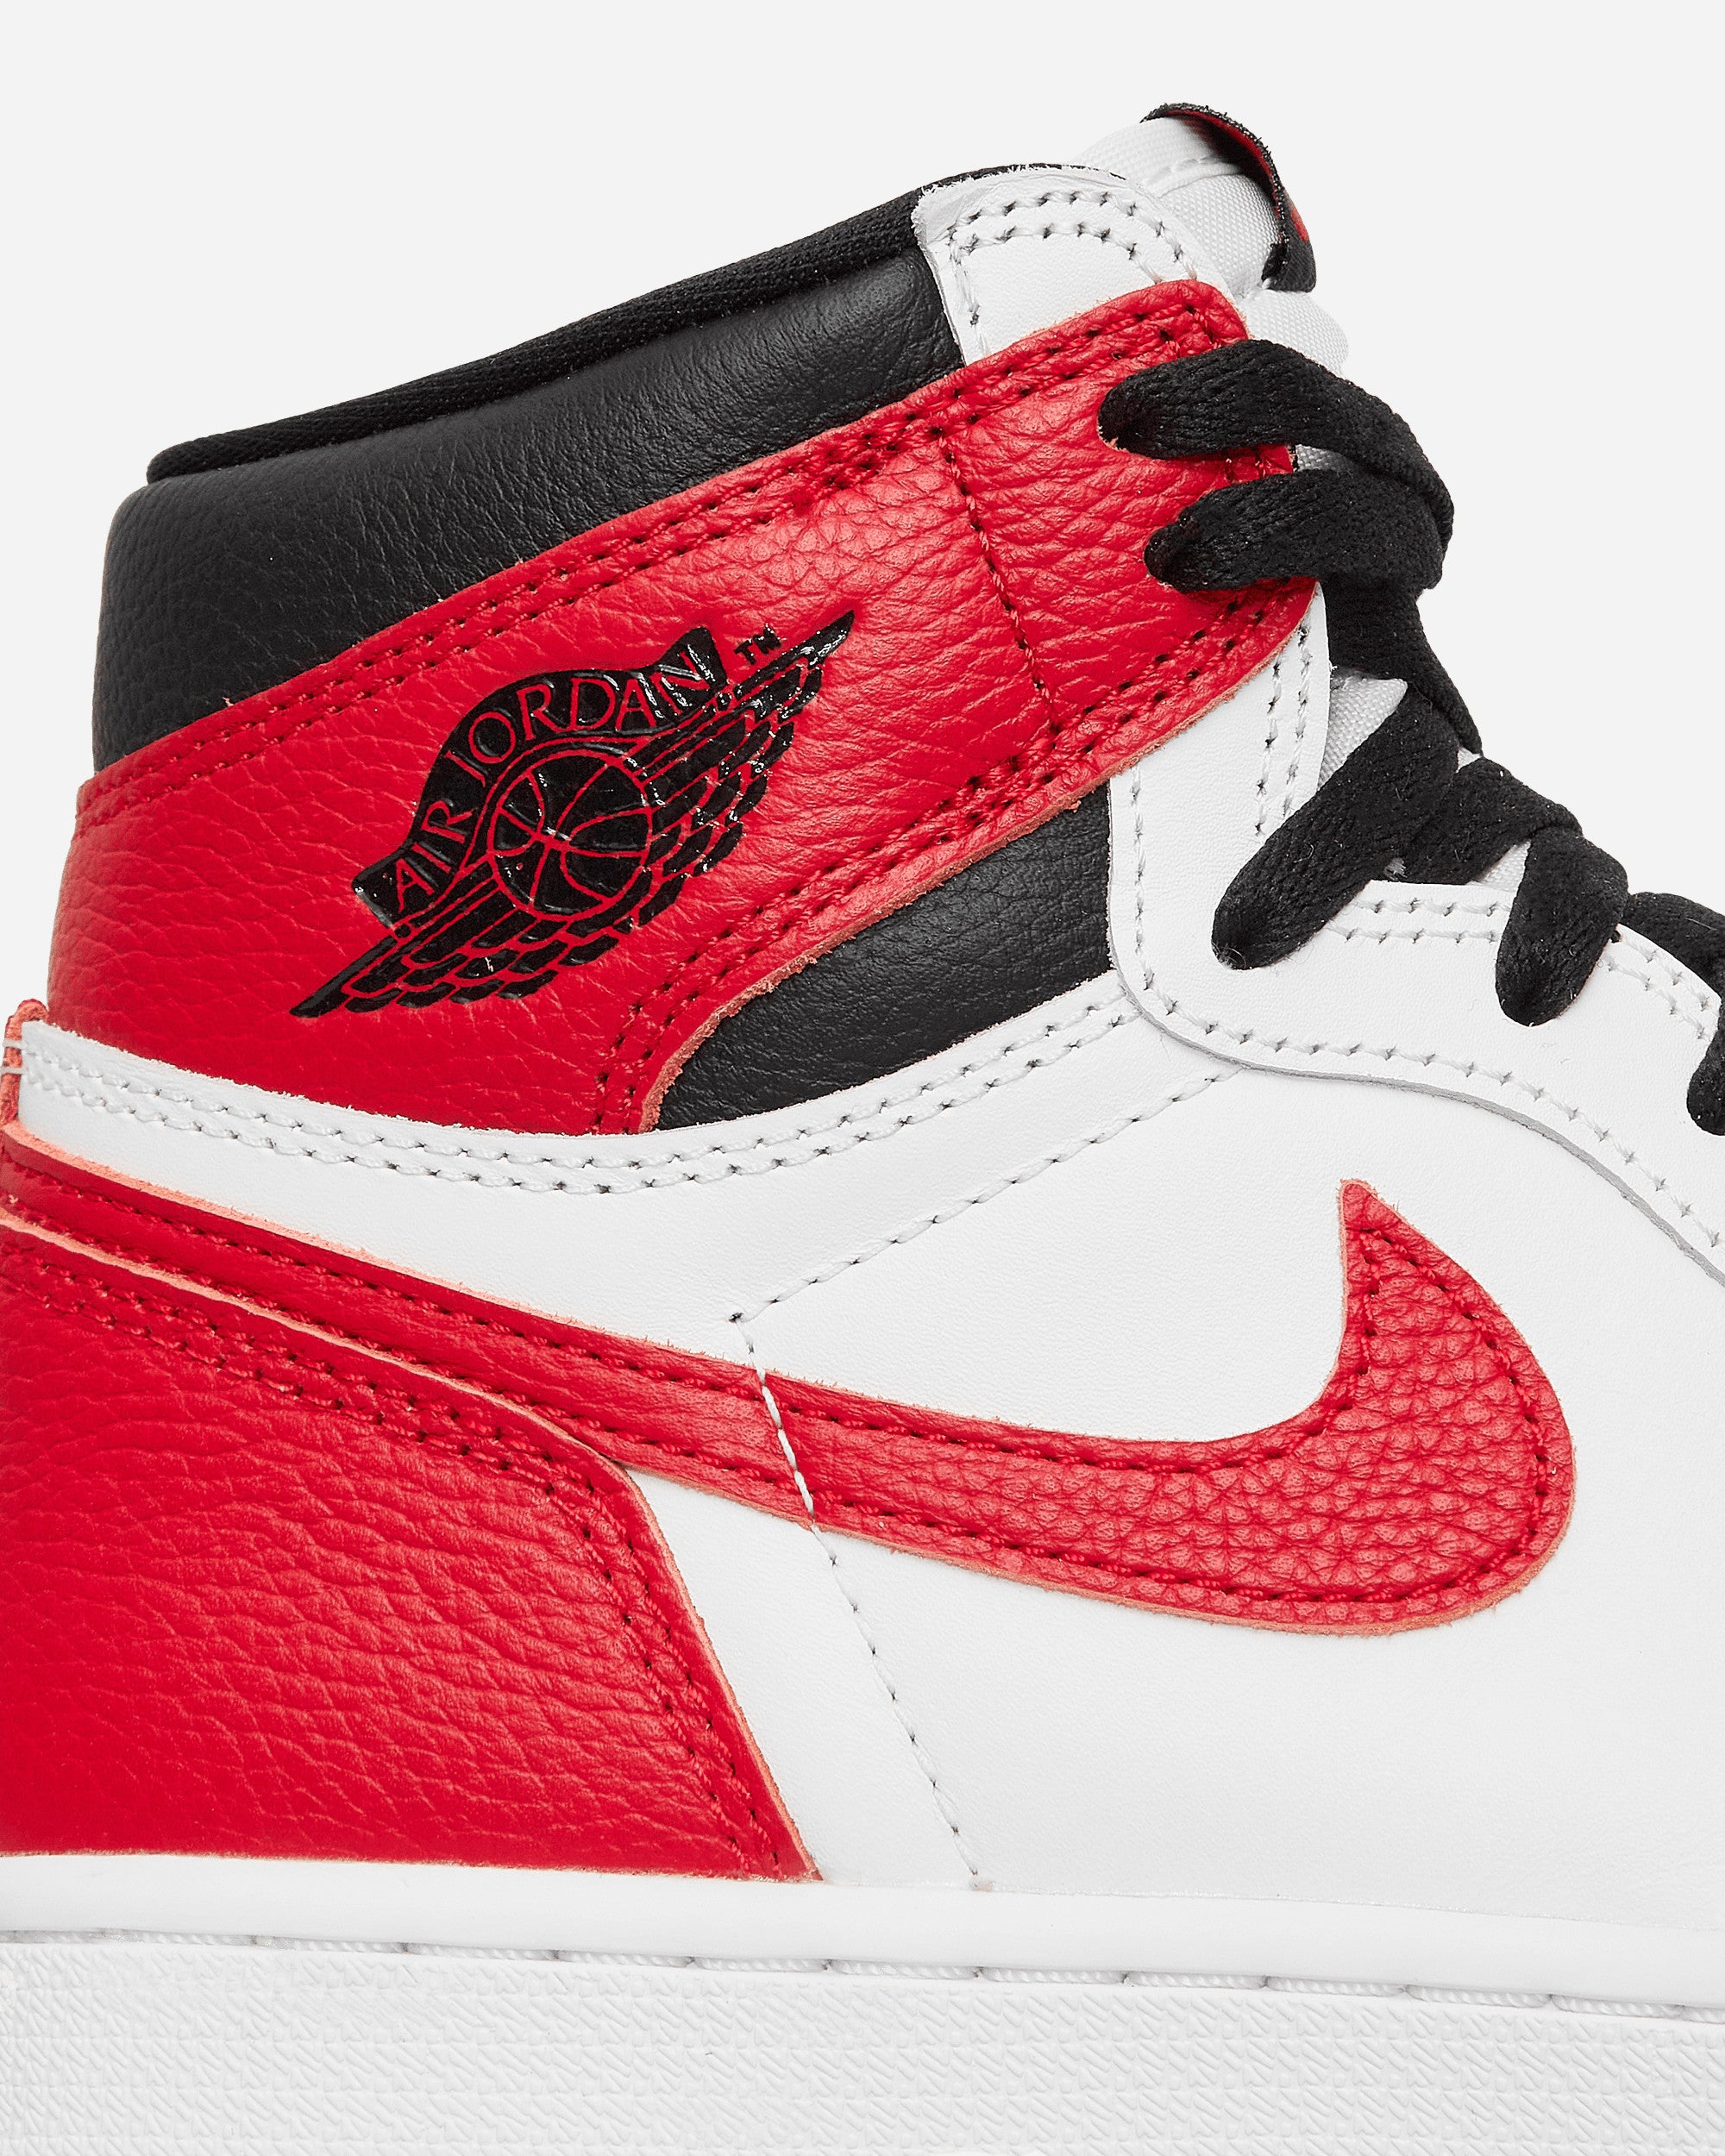 Nike Jordan Air Jordan 1 Retro High Og White/University Red Sneakers High 555088-161